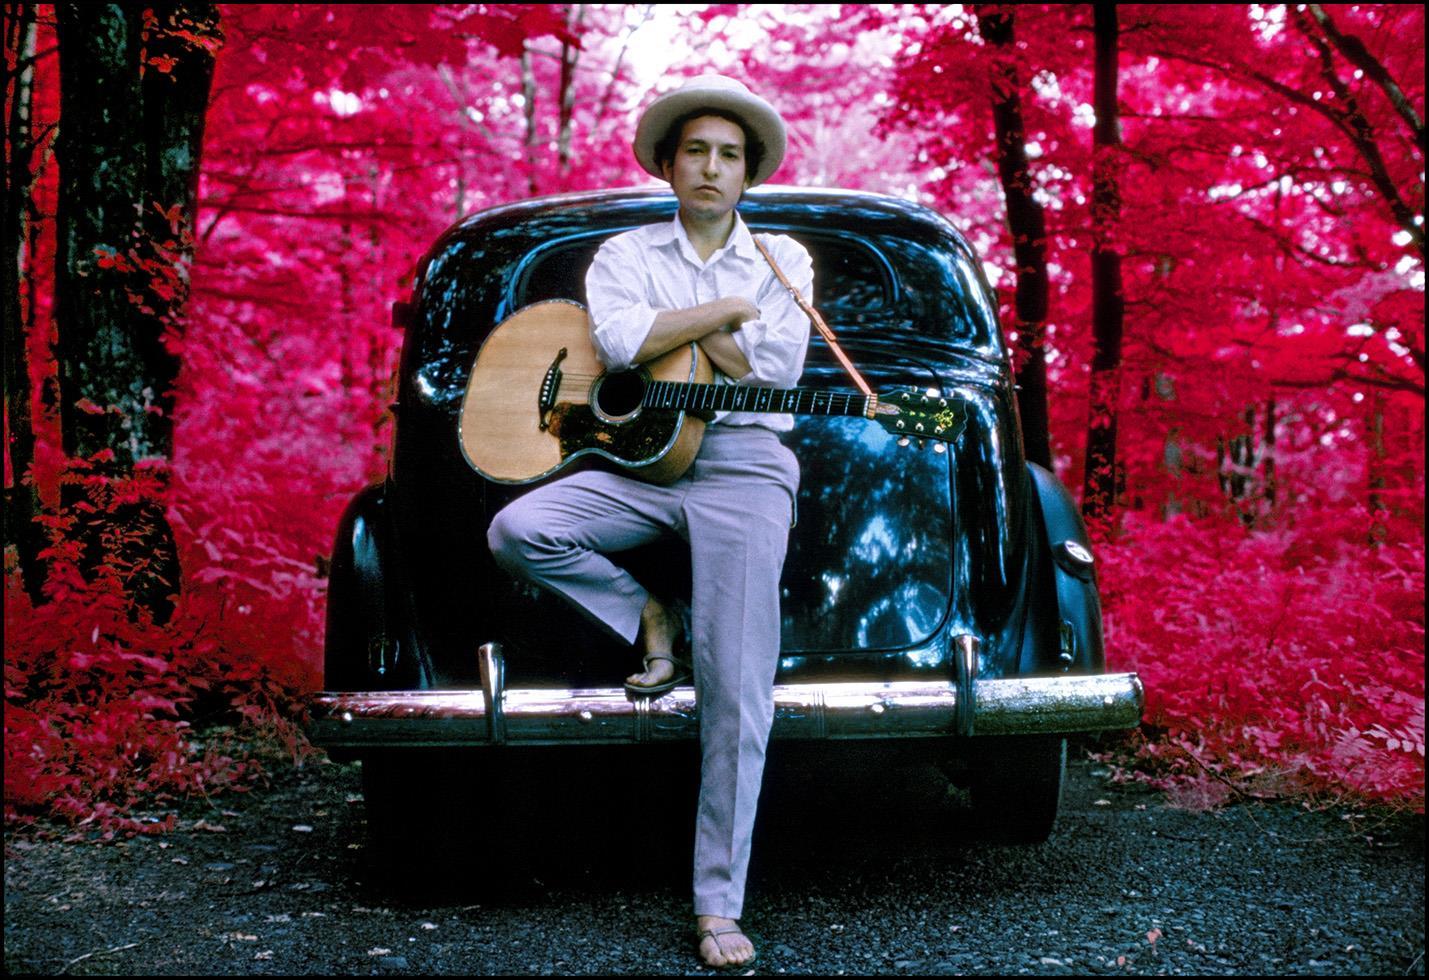 Elliott Landy Color Photograph - Bob Dylan "Infrared"